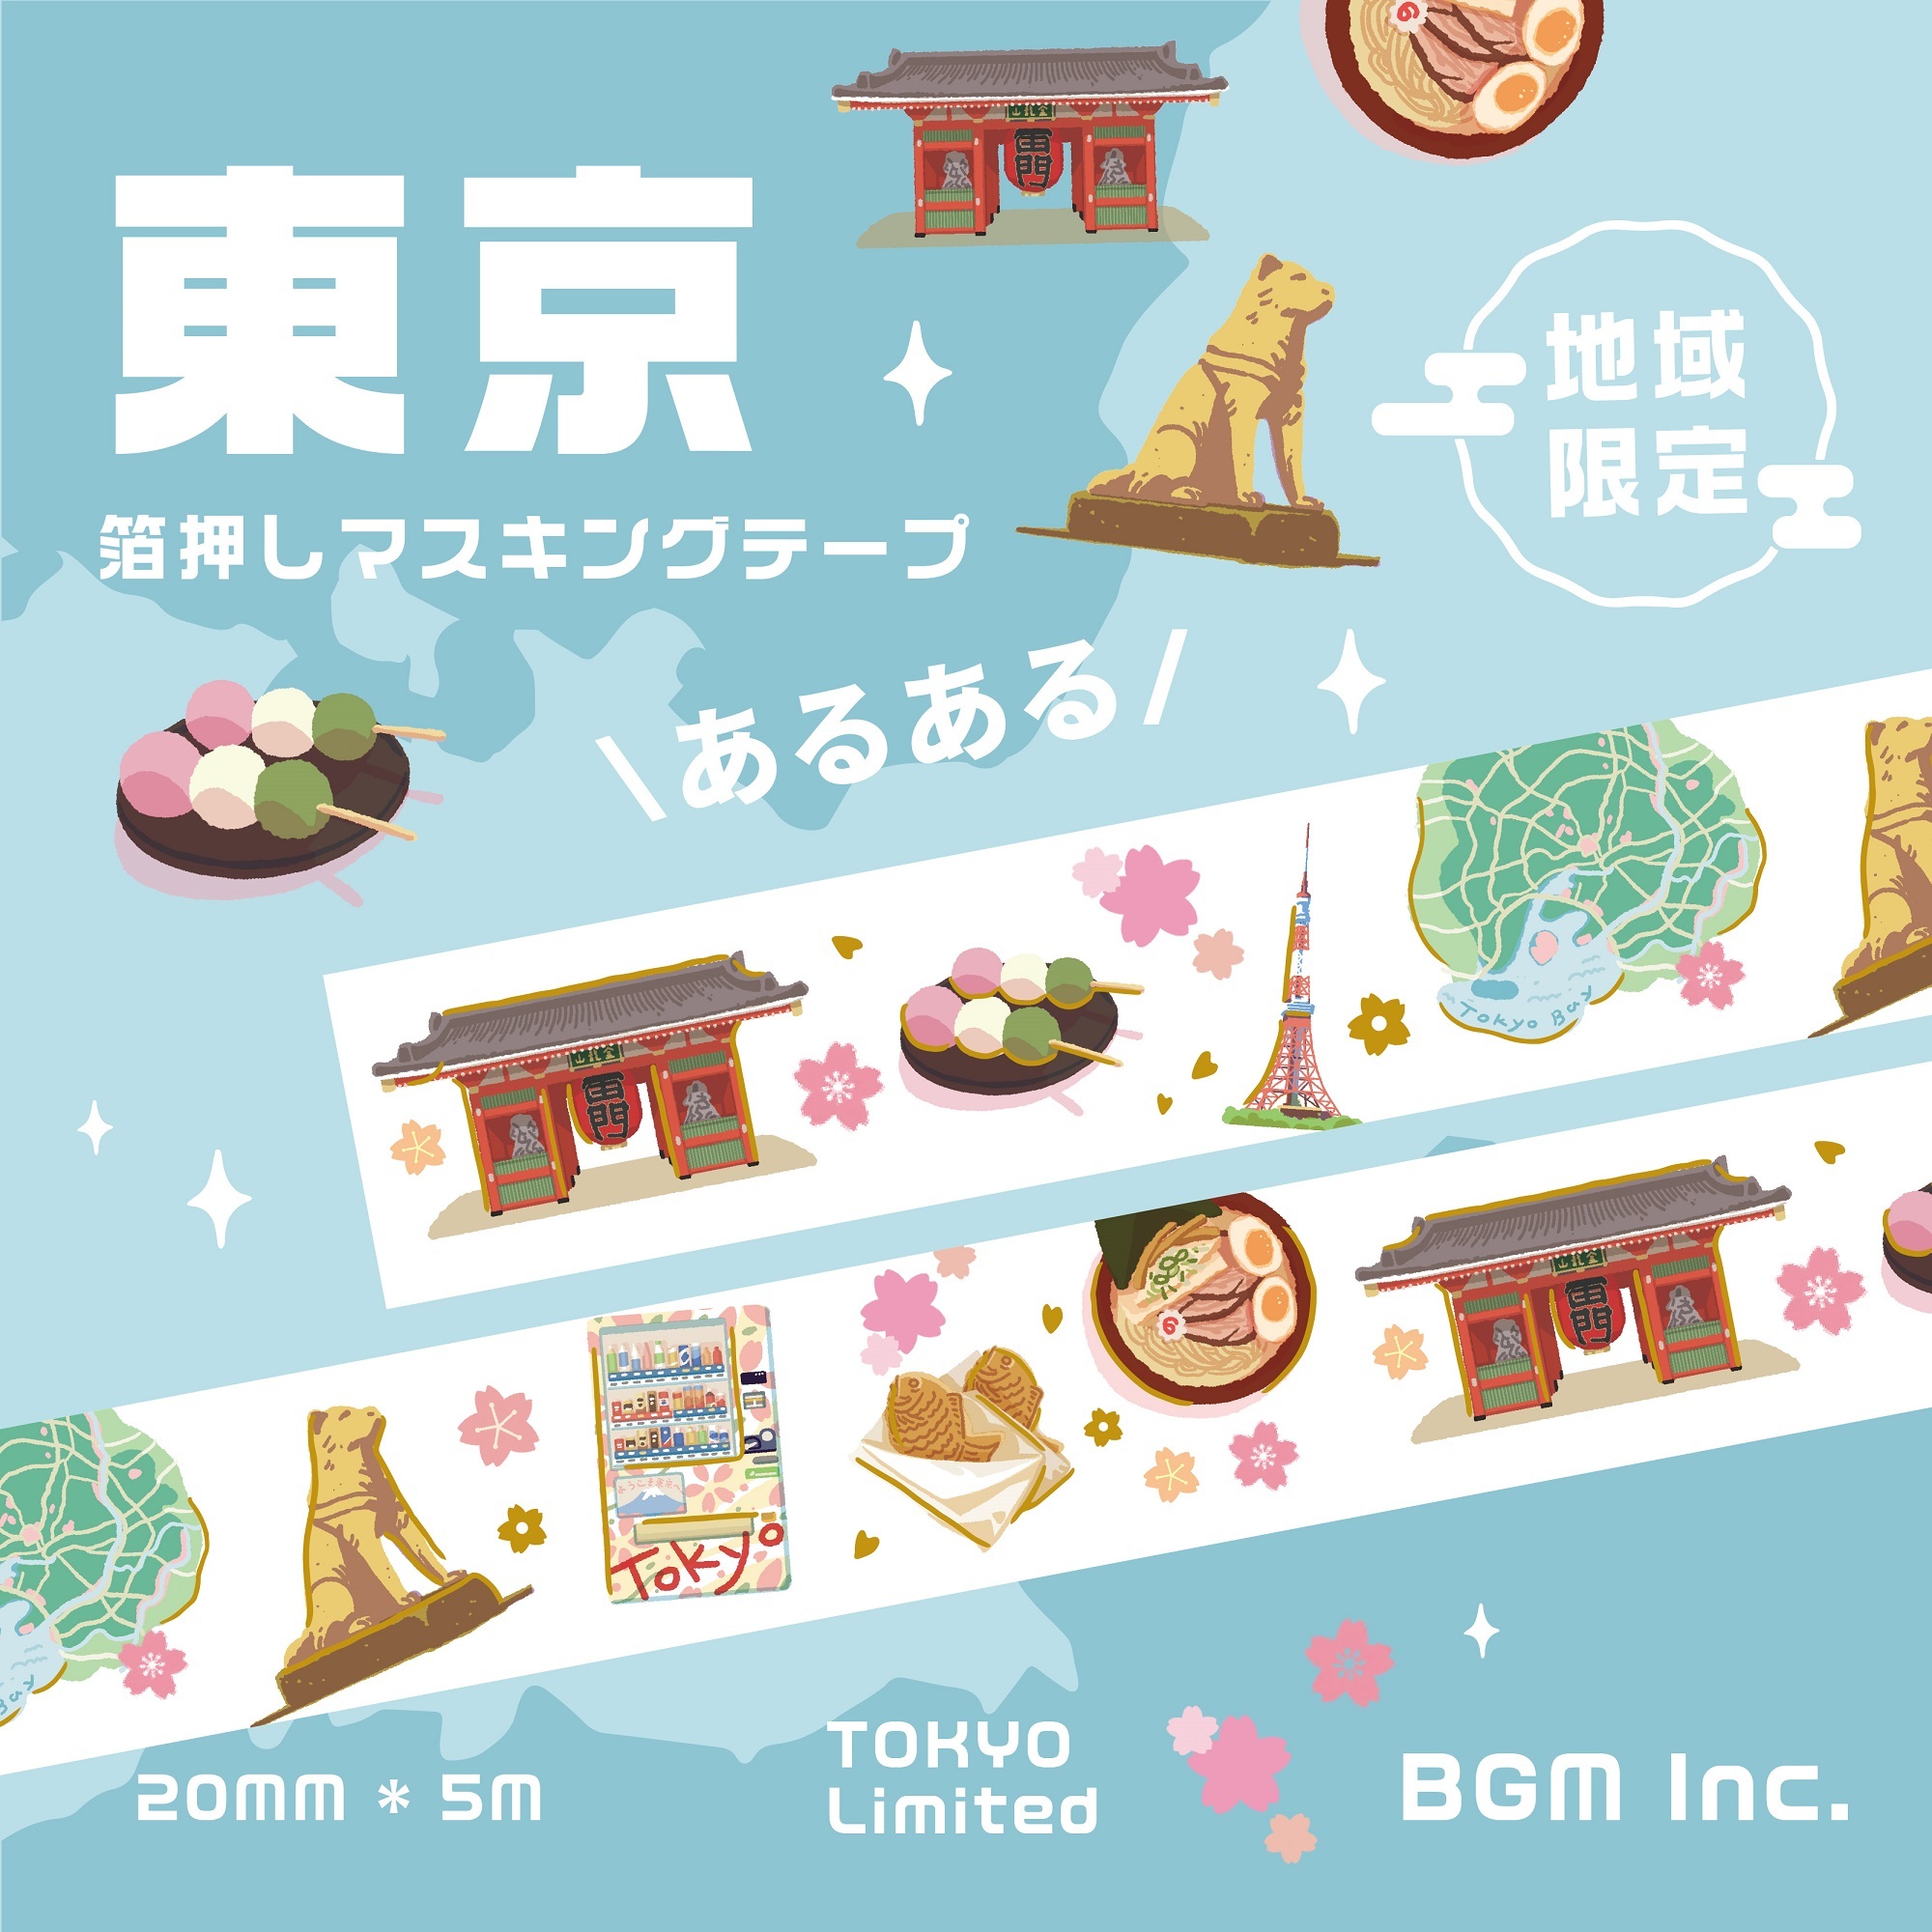 BGM「地域限定・東京 マスキングテープ」418円